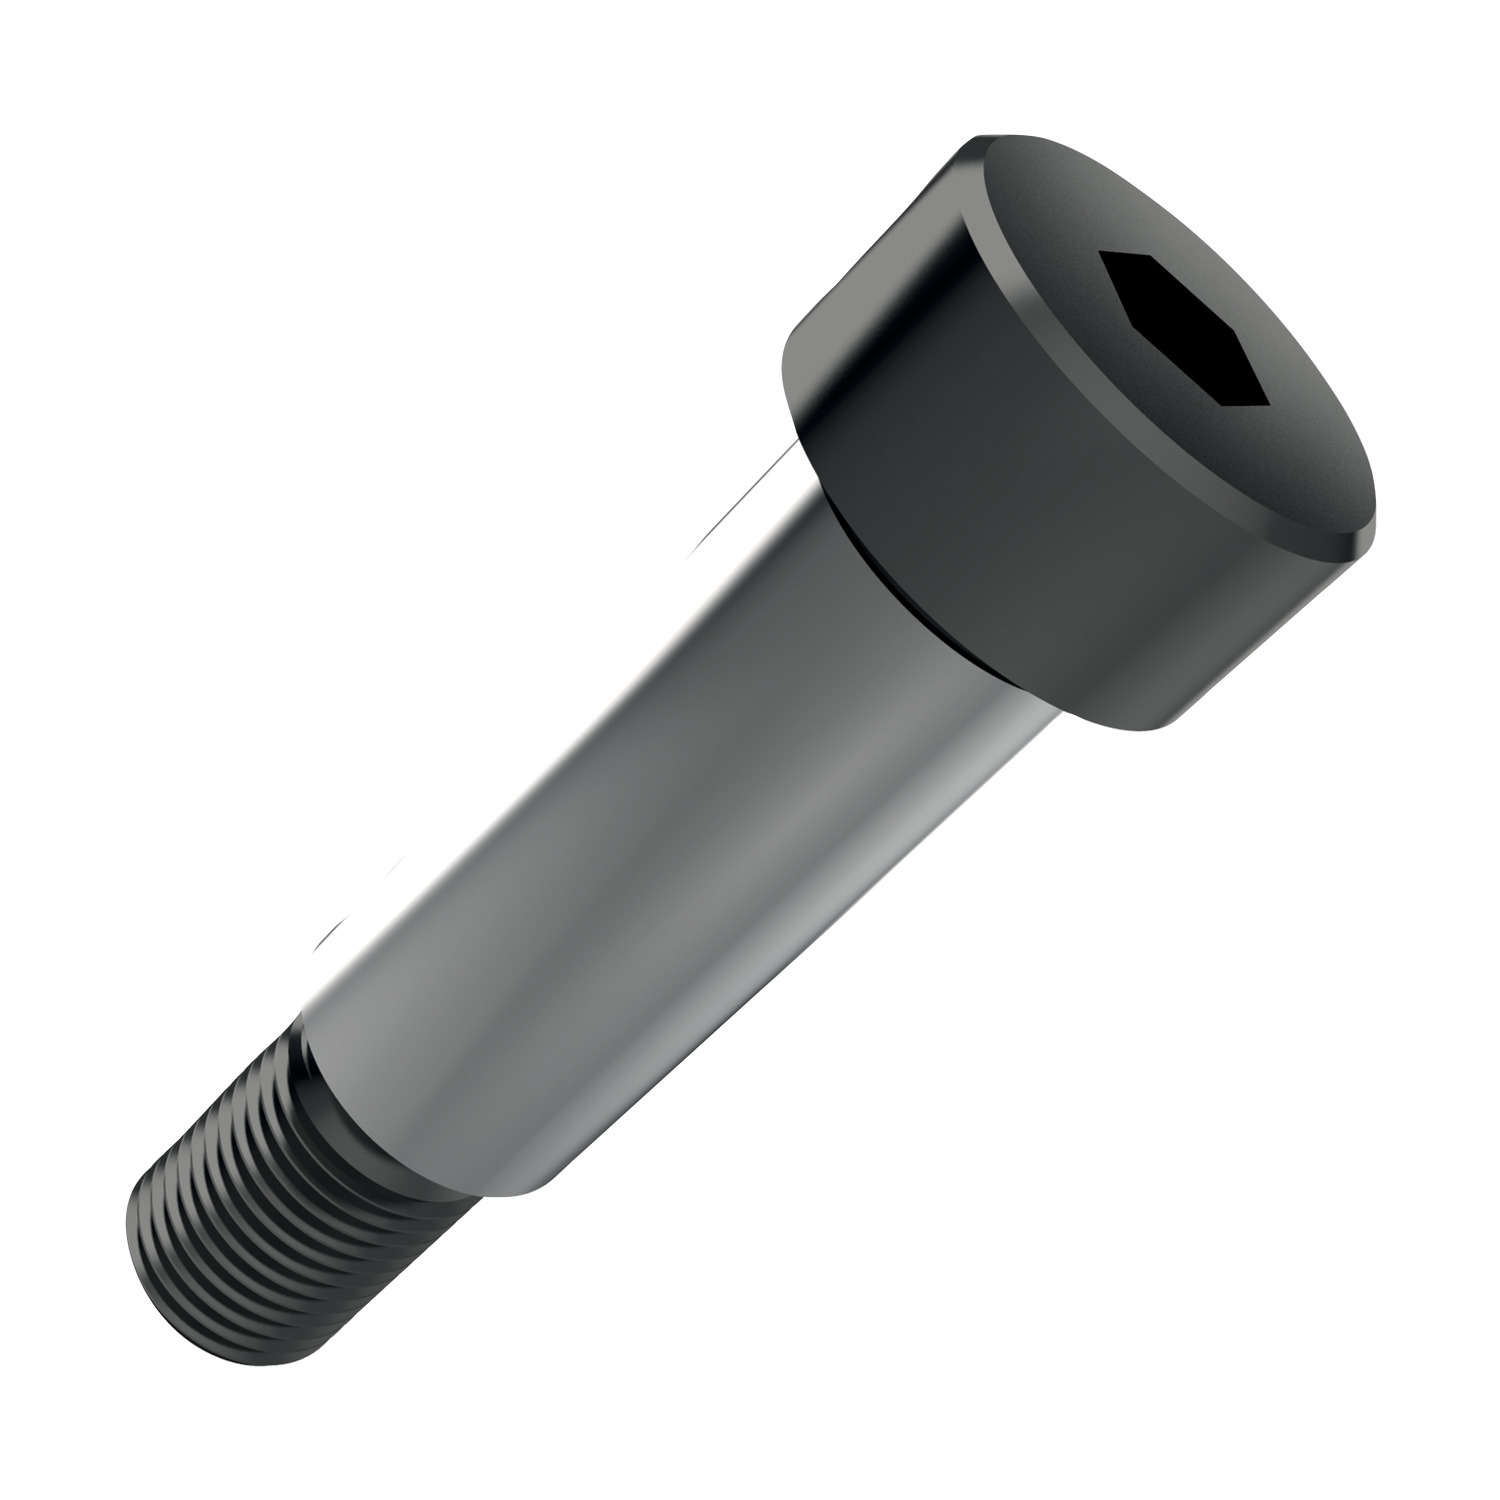 Shoulder Screws - Hex. Socket Head Steel shoulder screws in stock at our UK manufacturing facility.